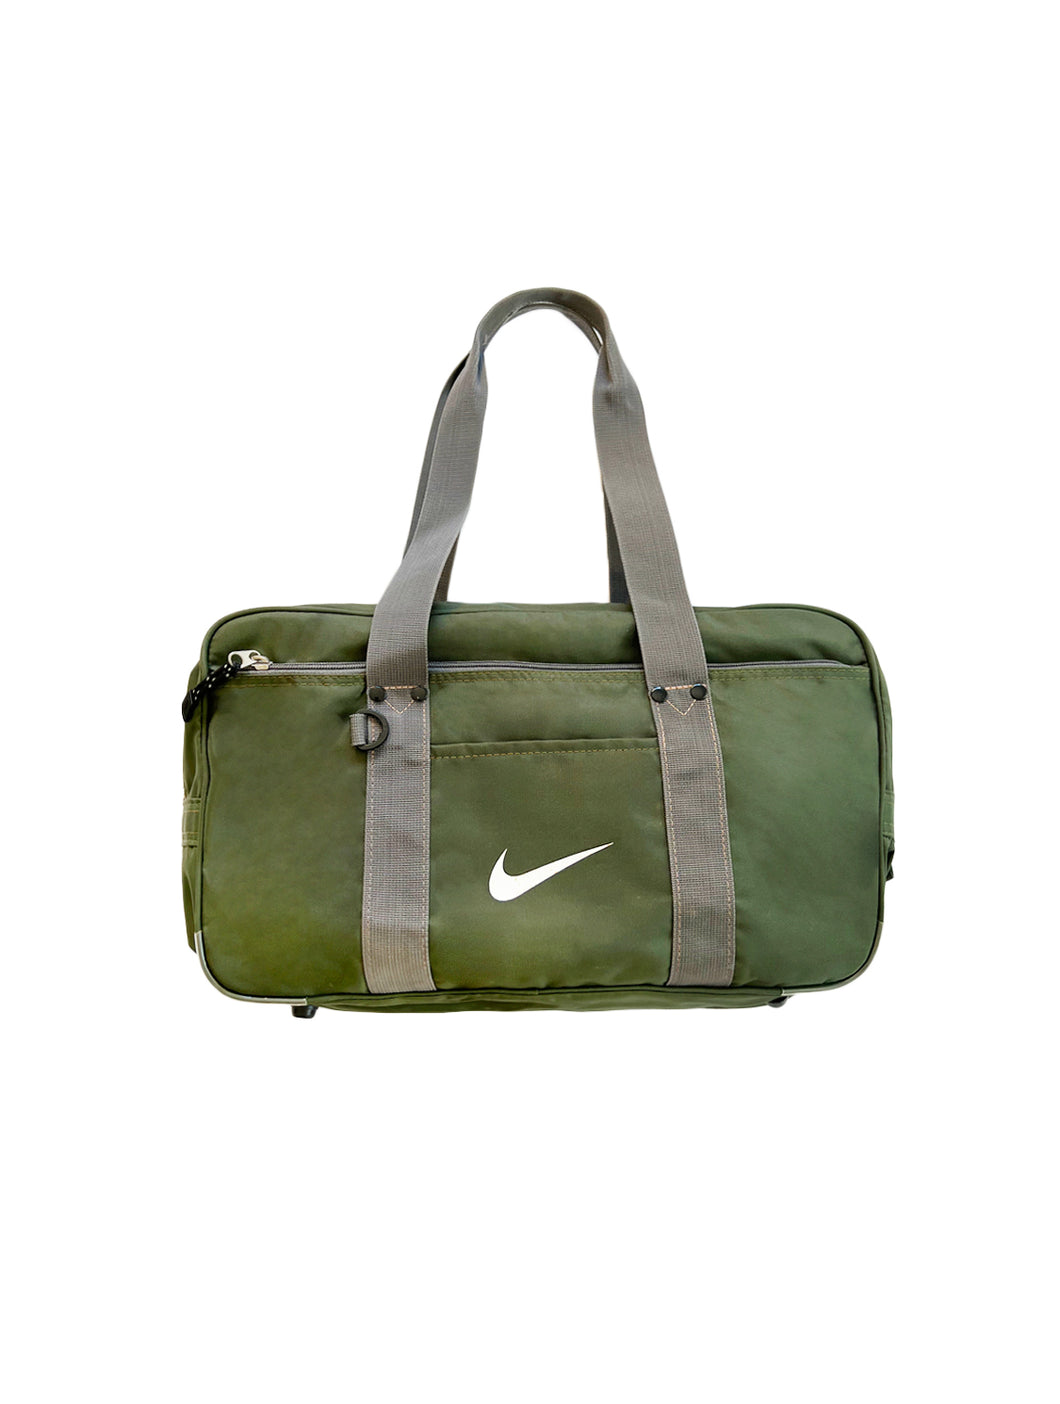 Nike Khaki Green Canvas Duffle Bag